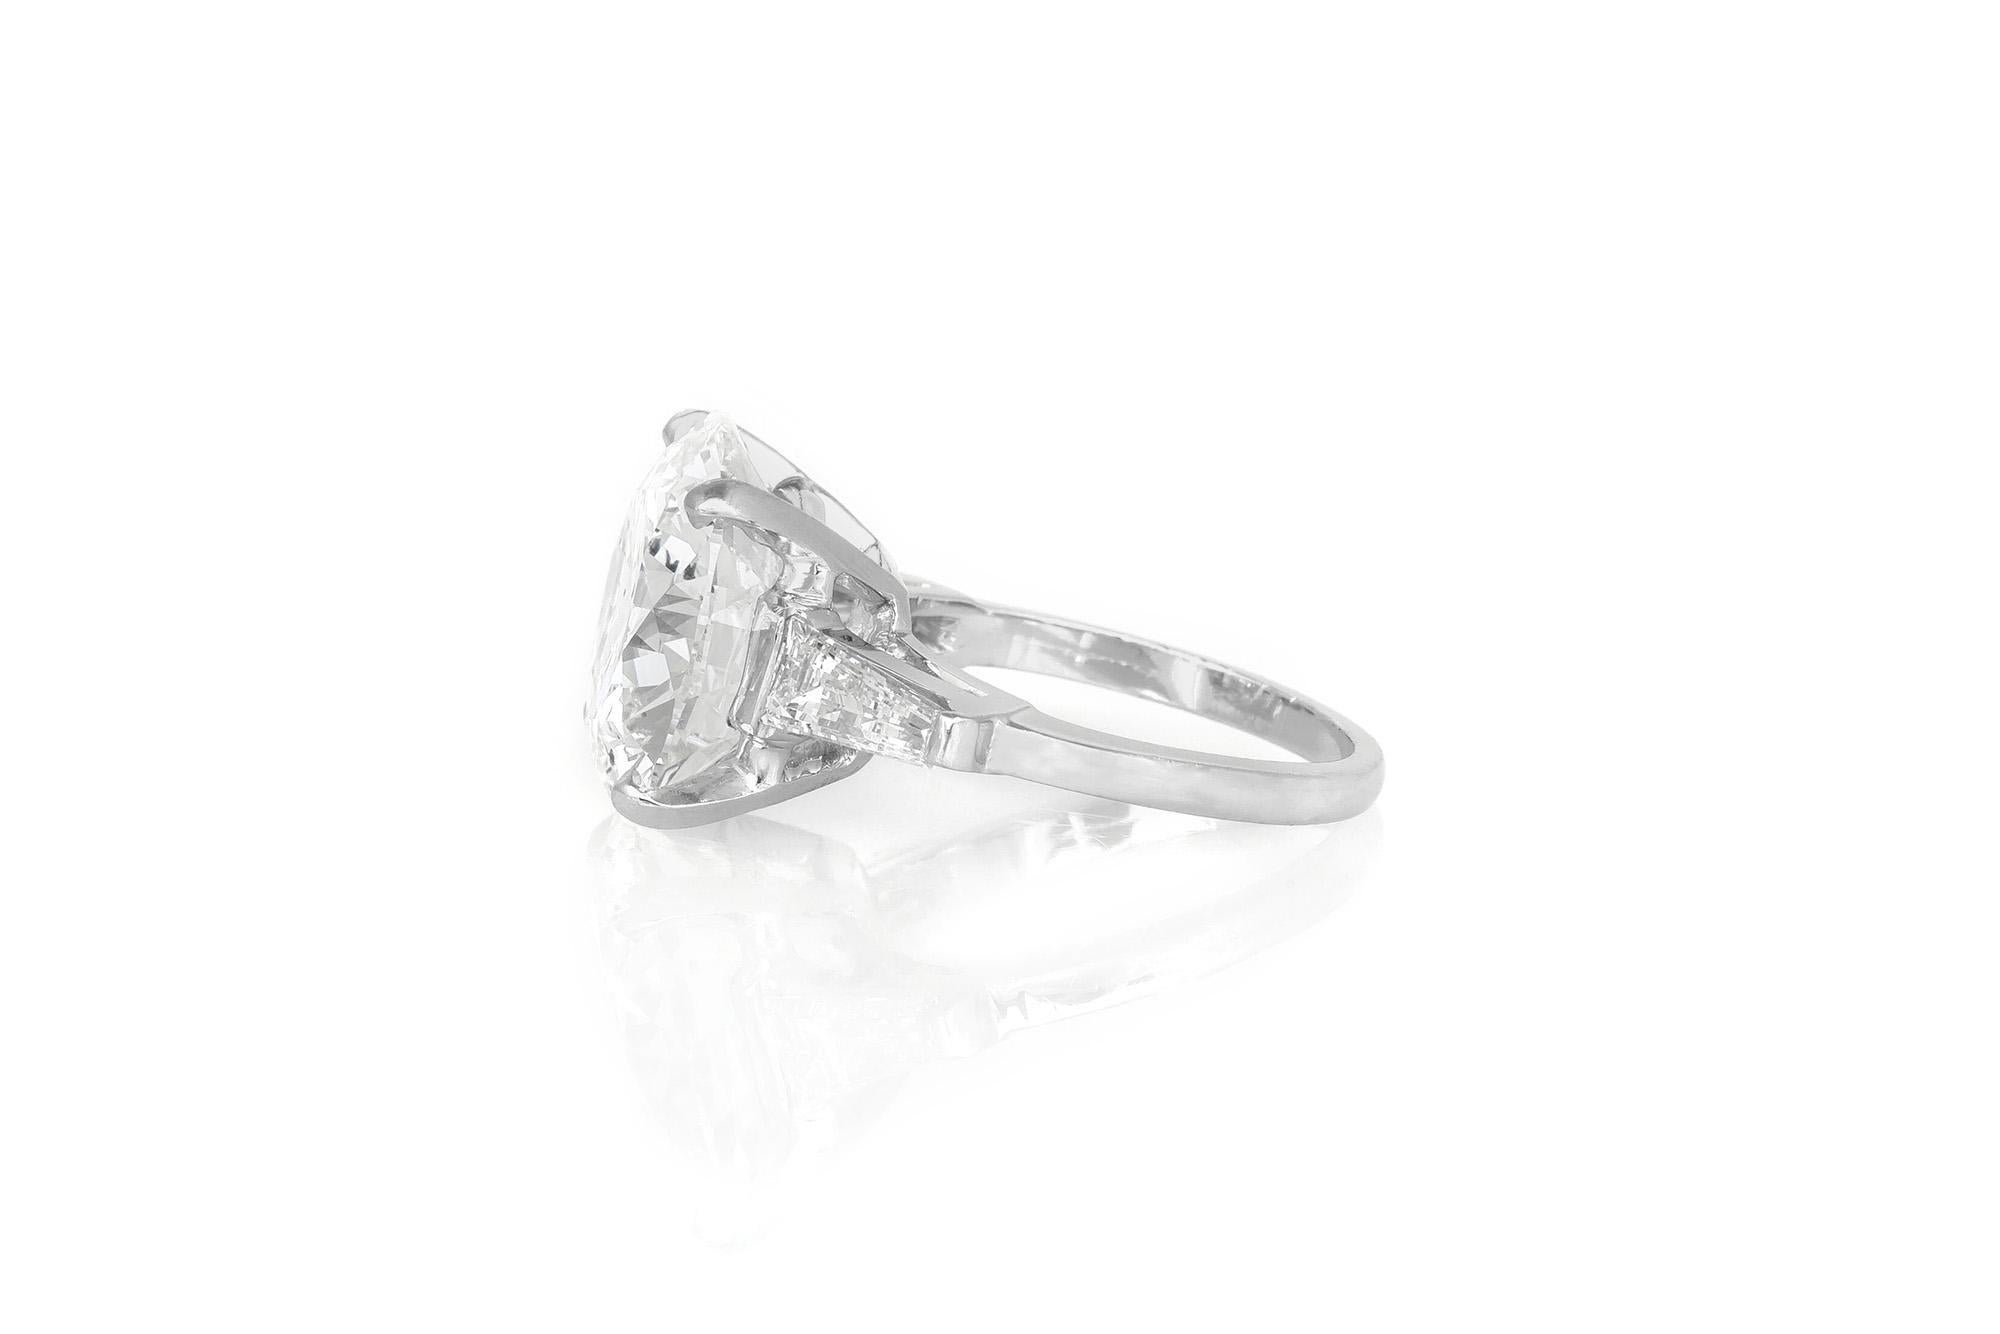 8 carat round diamond ring